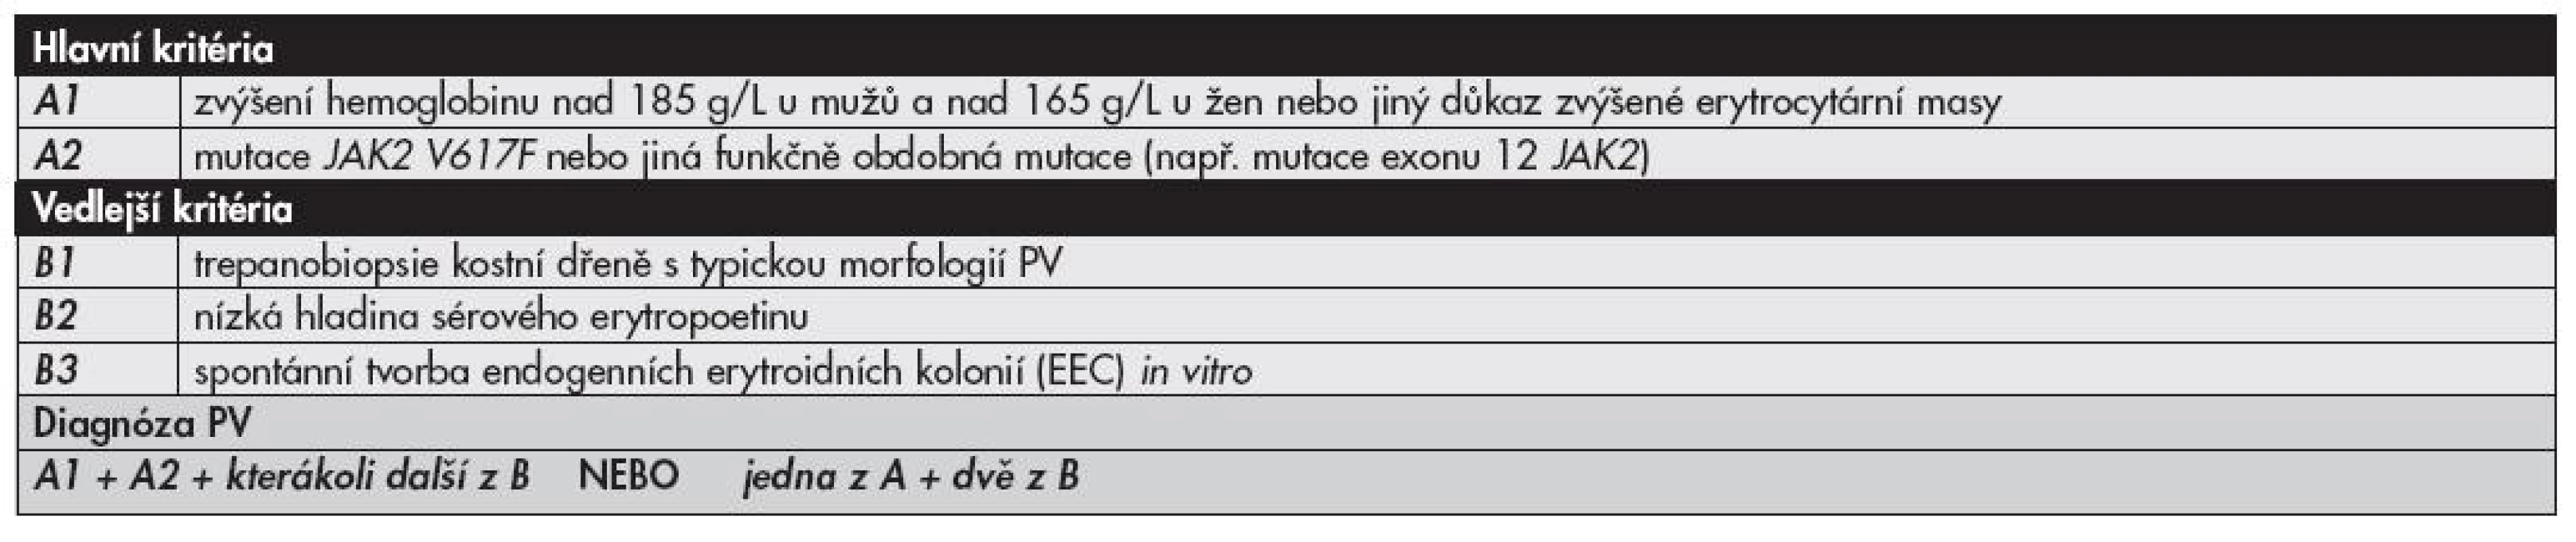 Diagnostická kritéria polycythaemia vera podle klasifikace WHO (4).